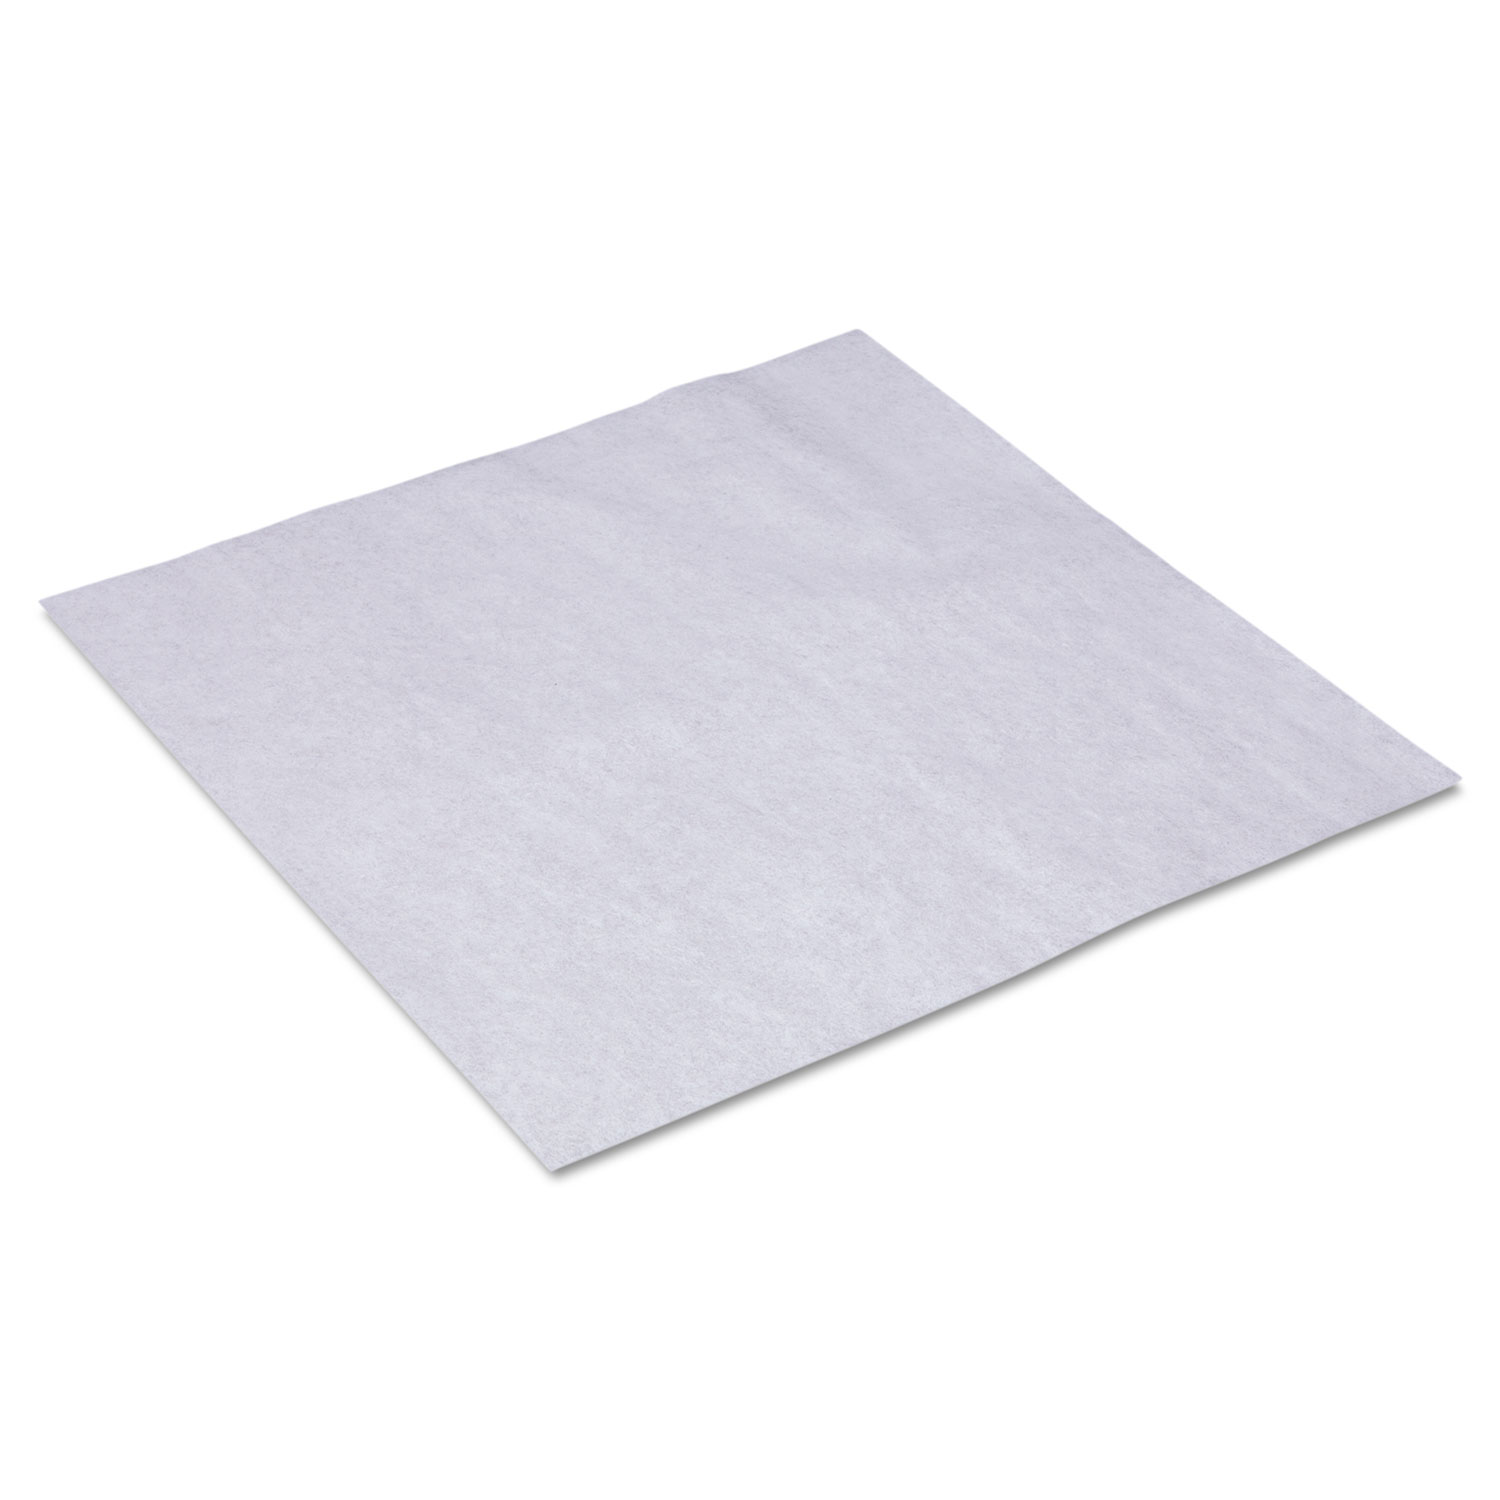 Grease-Resistant Paper Wrap/Liner, 12 x 12, White, 1000/Box, 5 Boxes/Carton